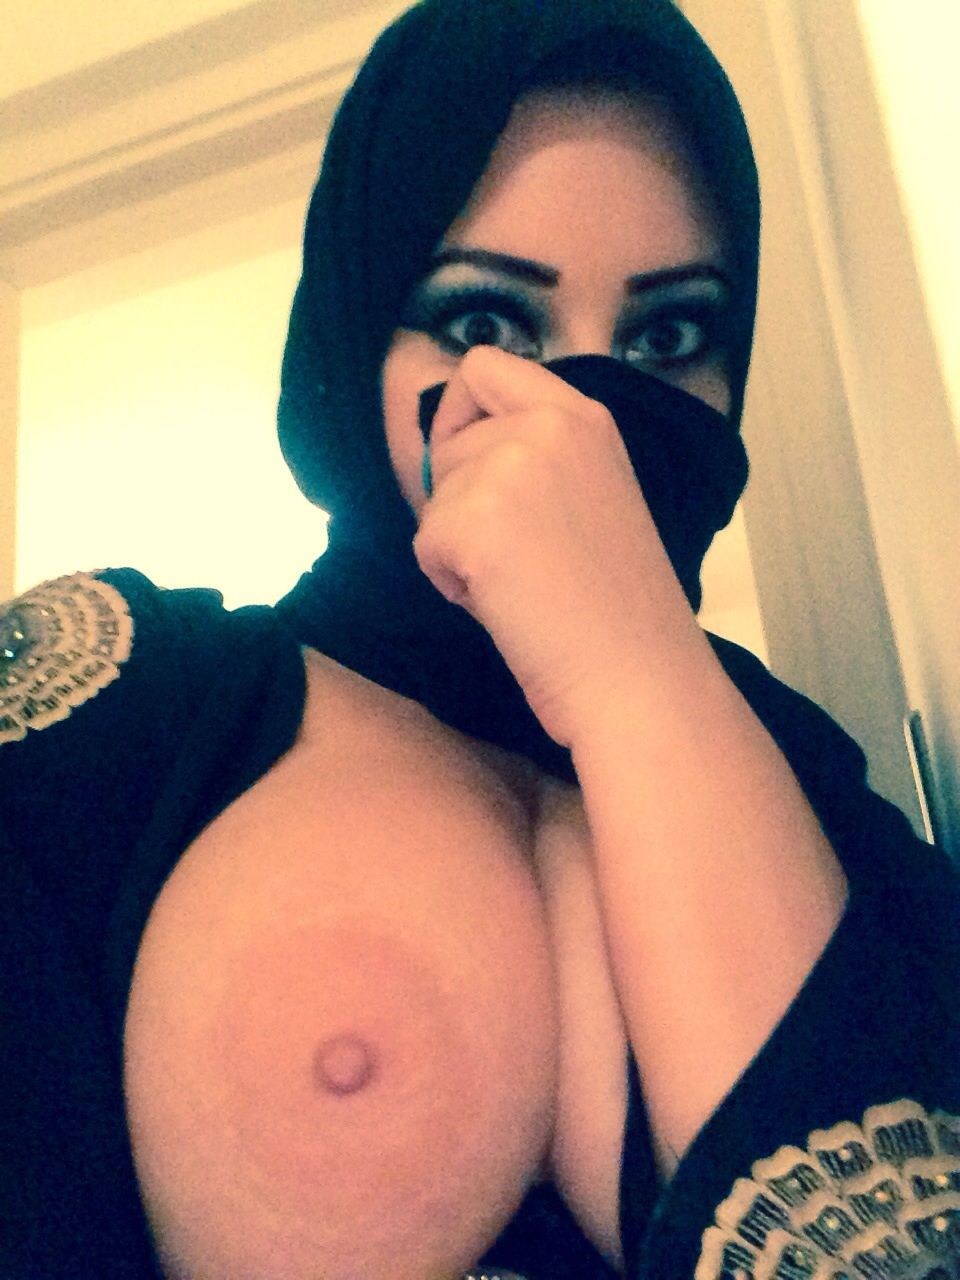 Porn Video Big Tit Irani Muslim Lady - Muslim Women with Big Boobs (82 photos) - sex eporner pics